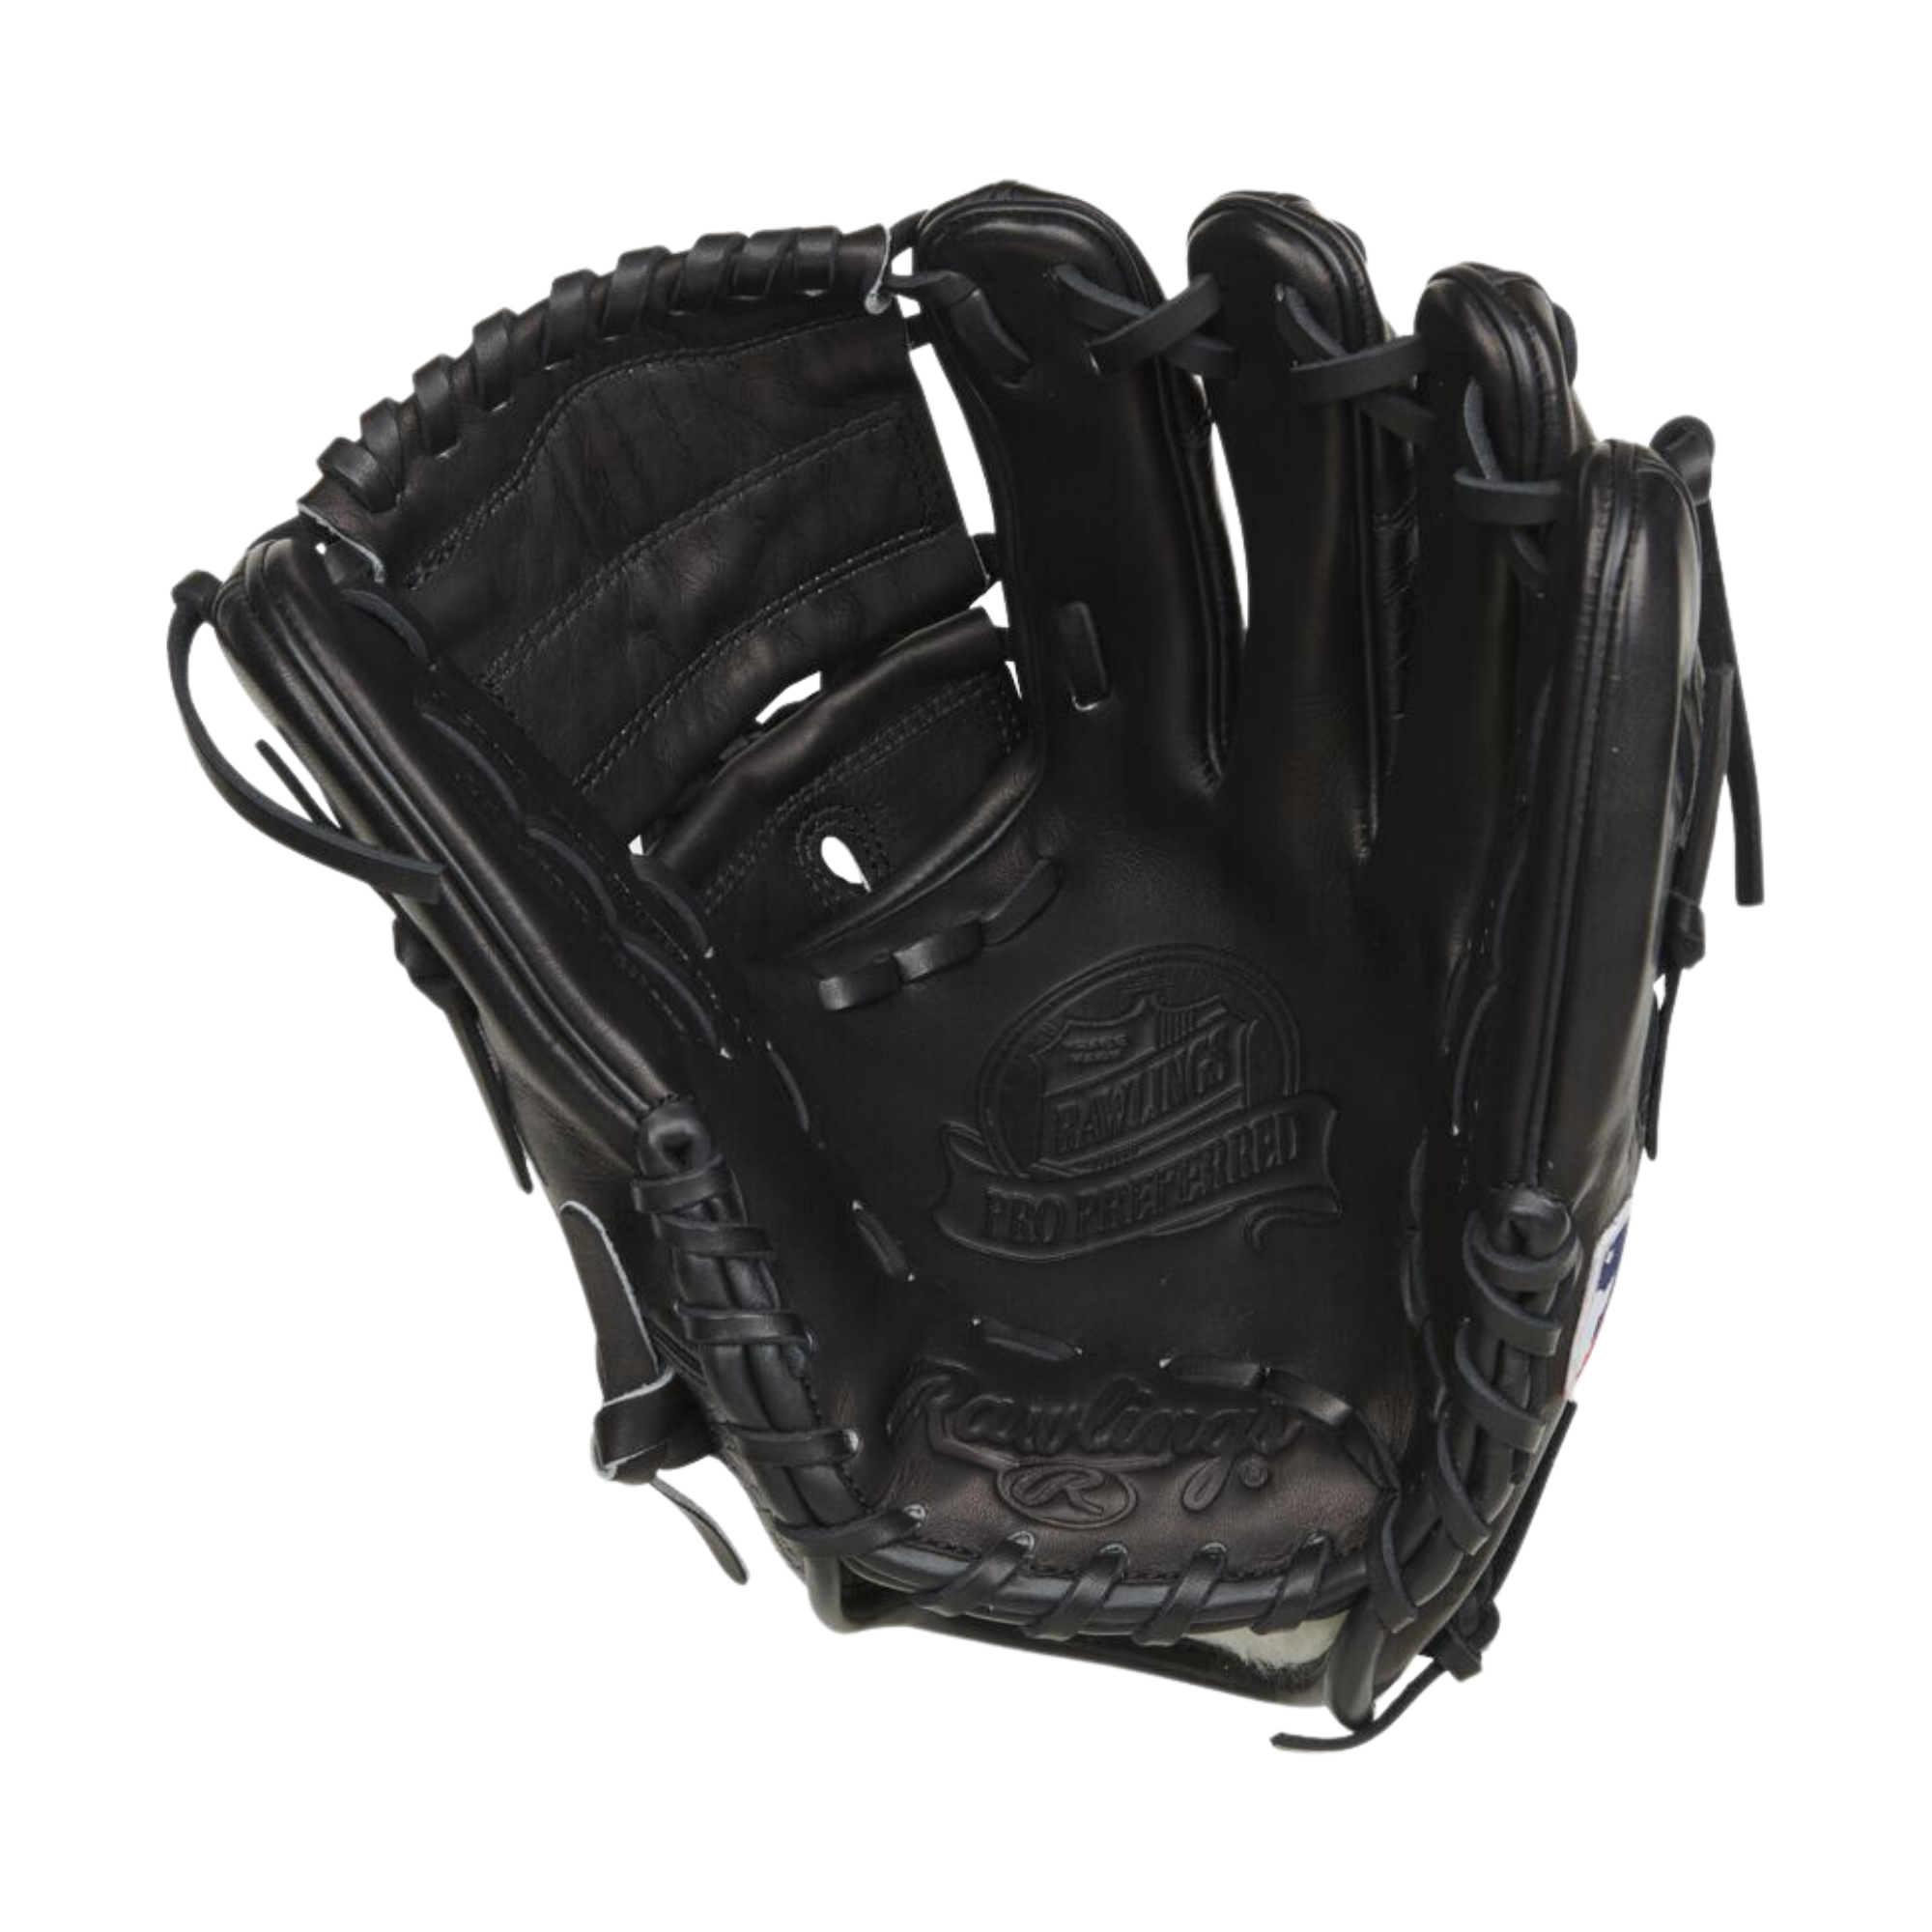 Rawlings Pro Preferred Series Baseball Glove J.Degrom Pitchers Glove 11.75" RHT